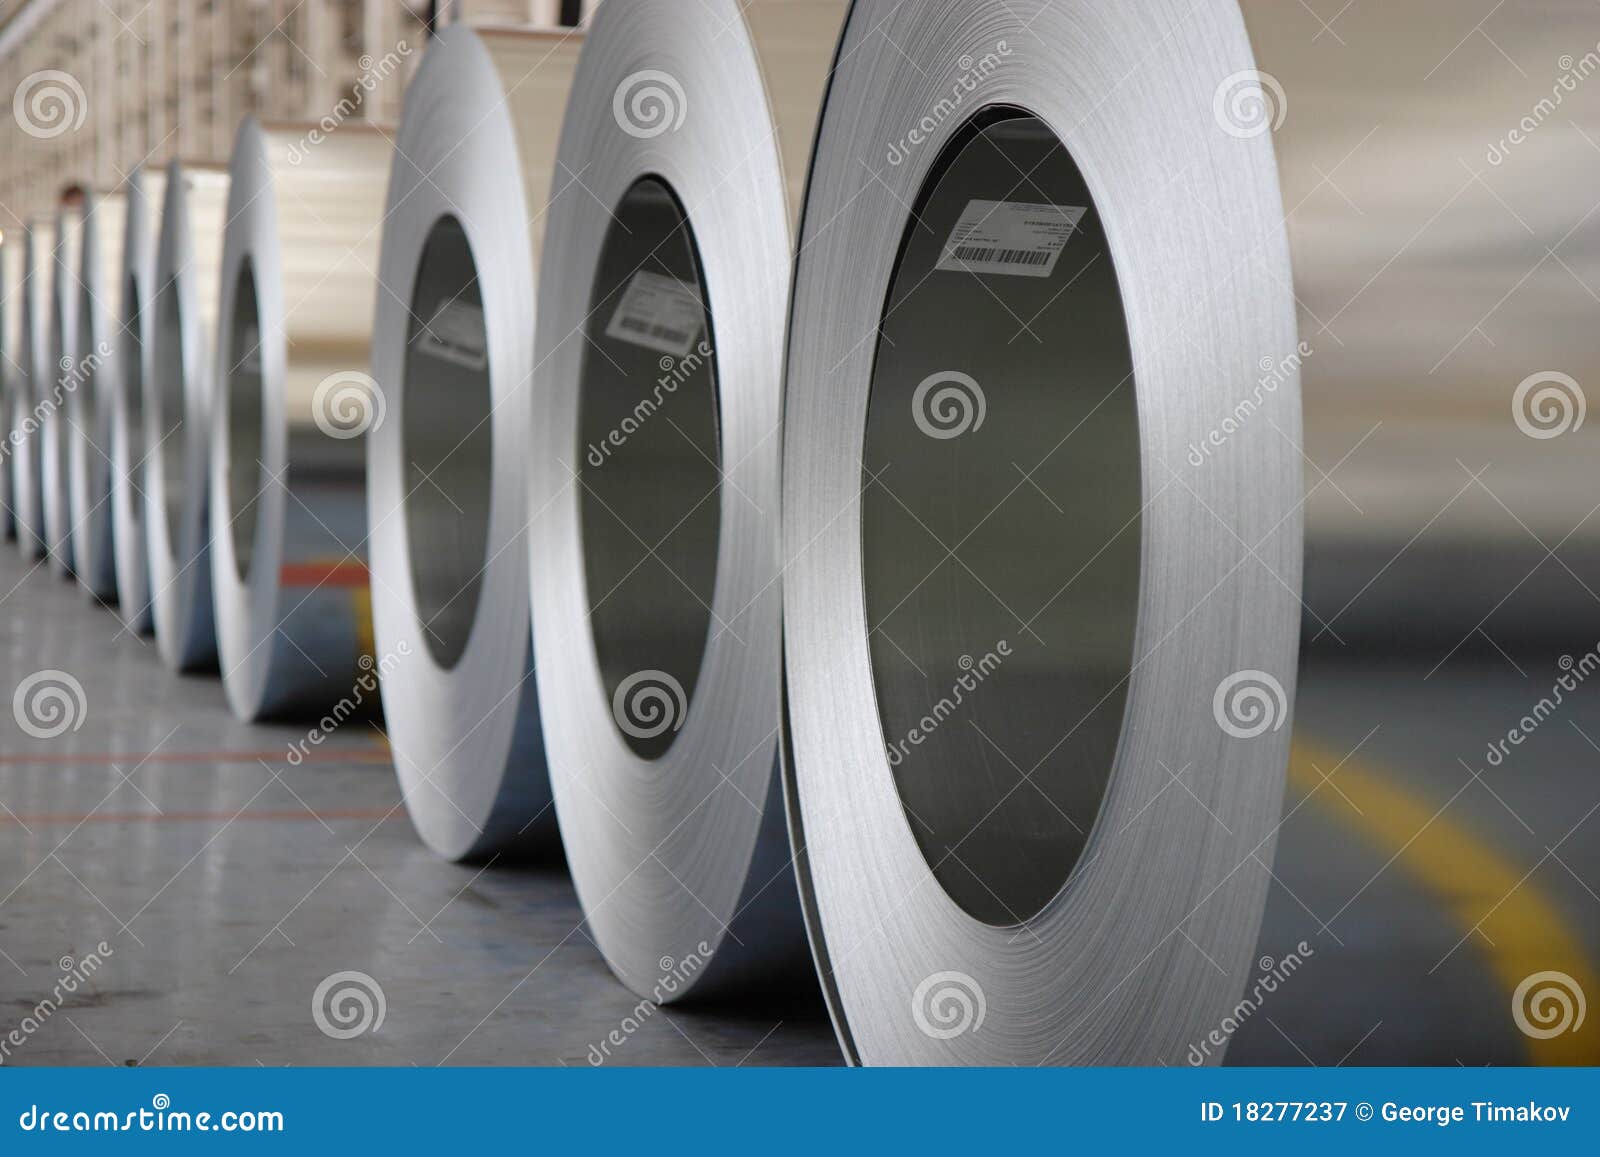 the galvanized steel rolls